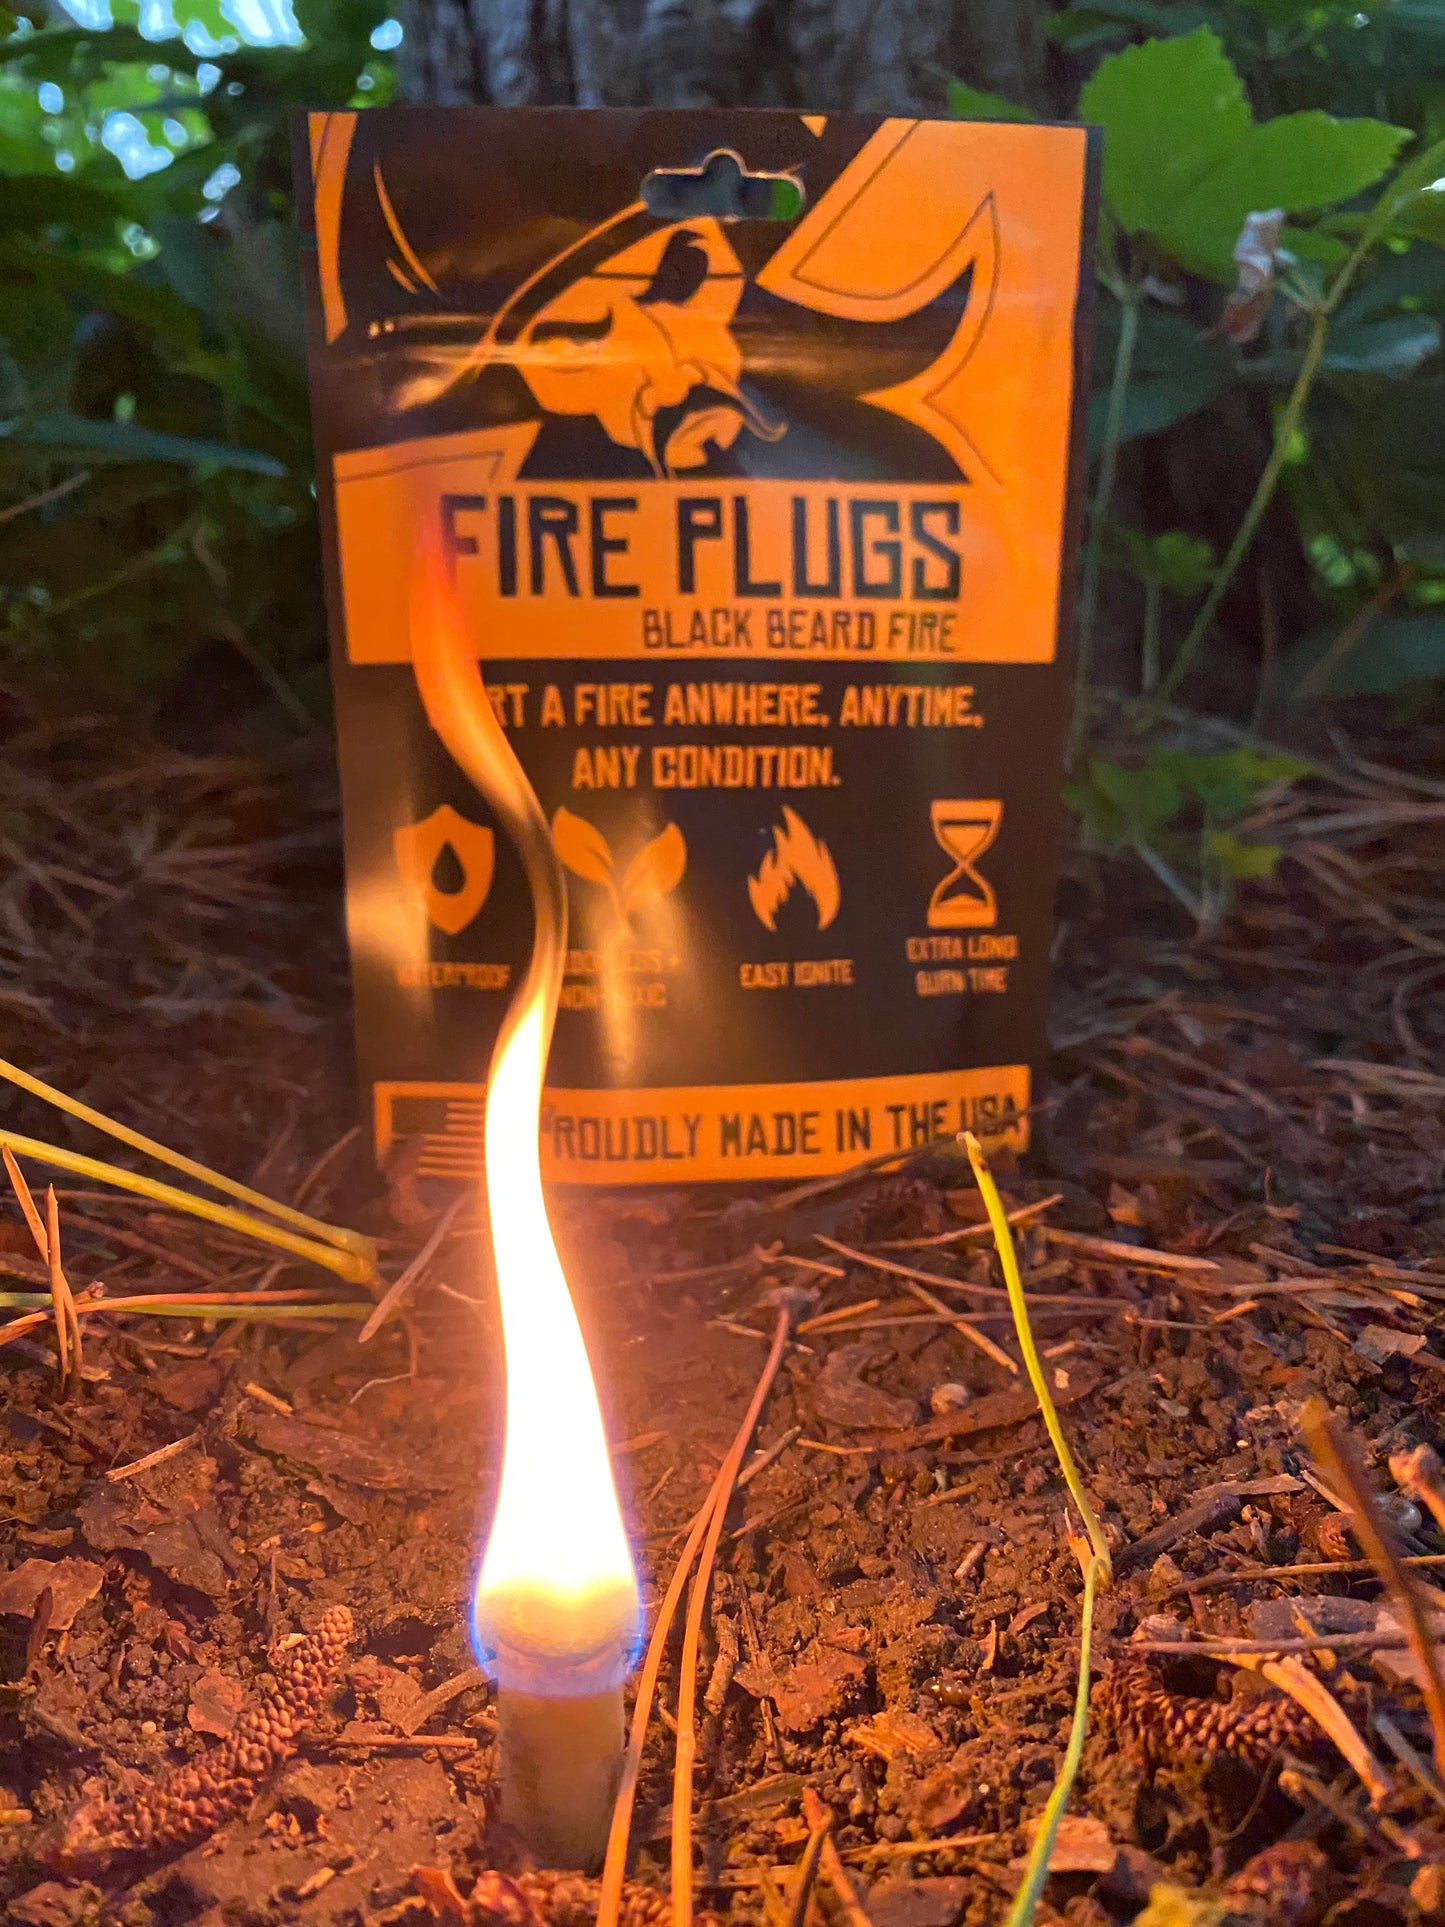 Black Beard Fire Plugs Fire Starter 1 Bag Test fire v2